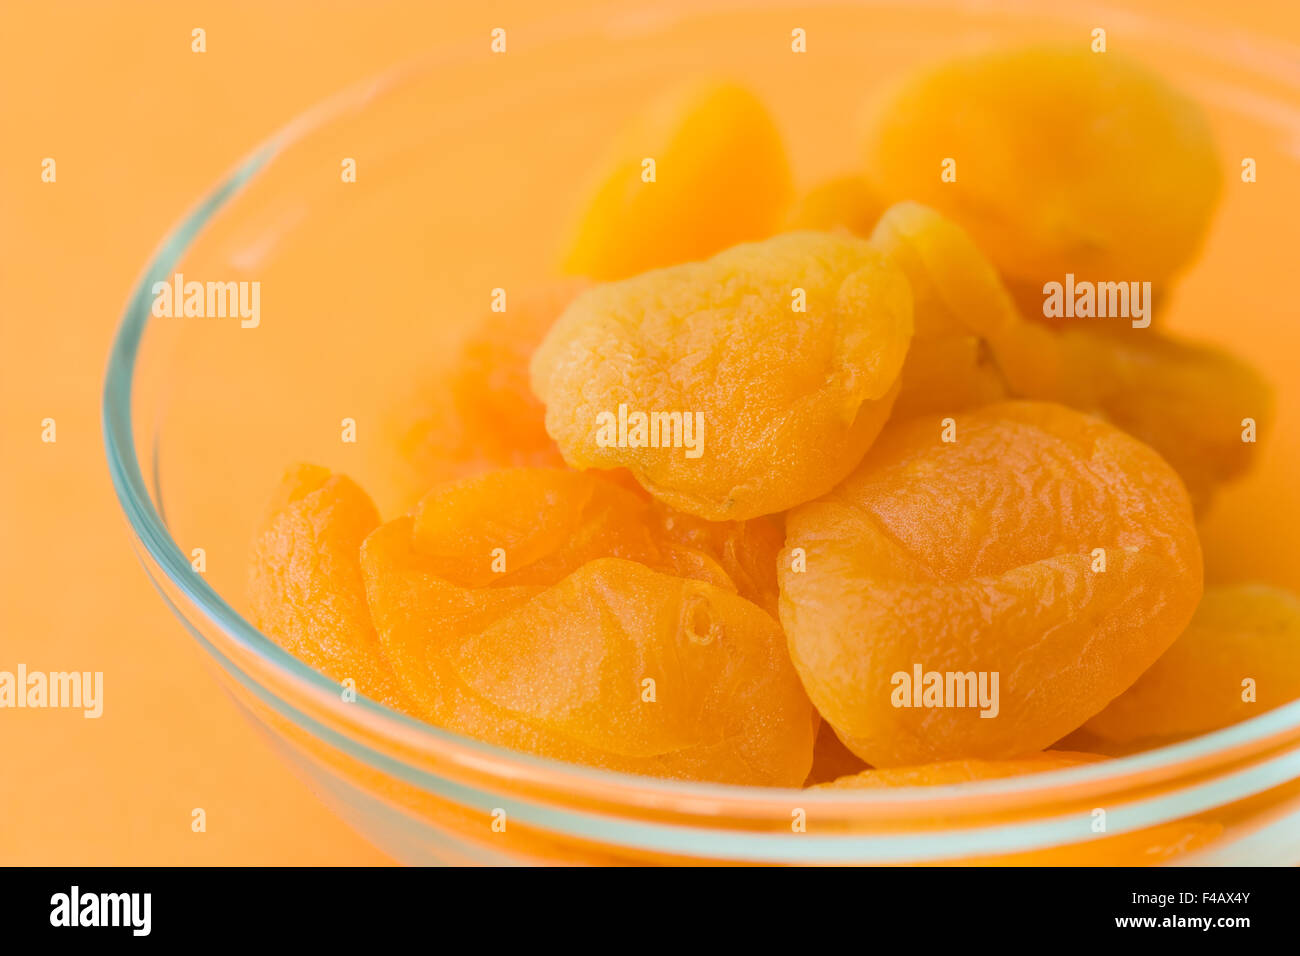 Getrocknete Aprikosen - Dried apricots Stock Photo